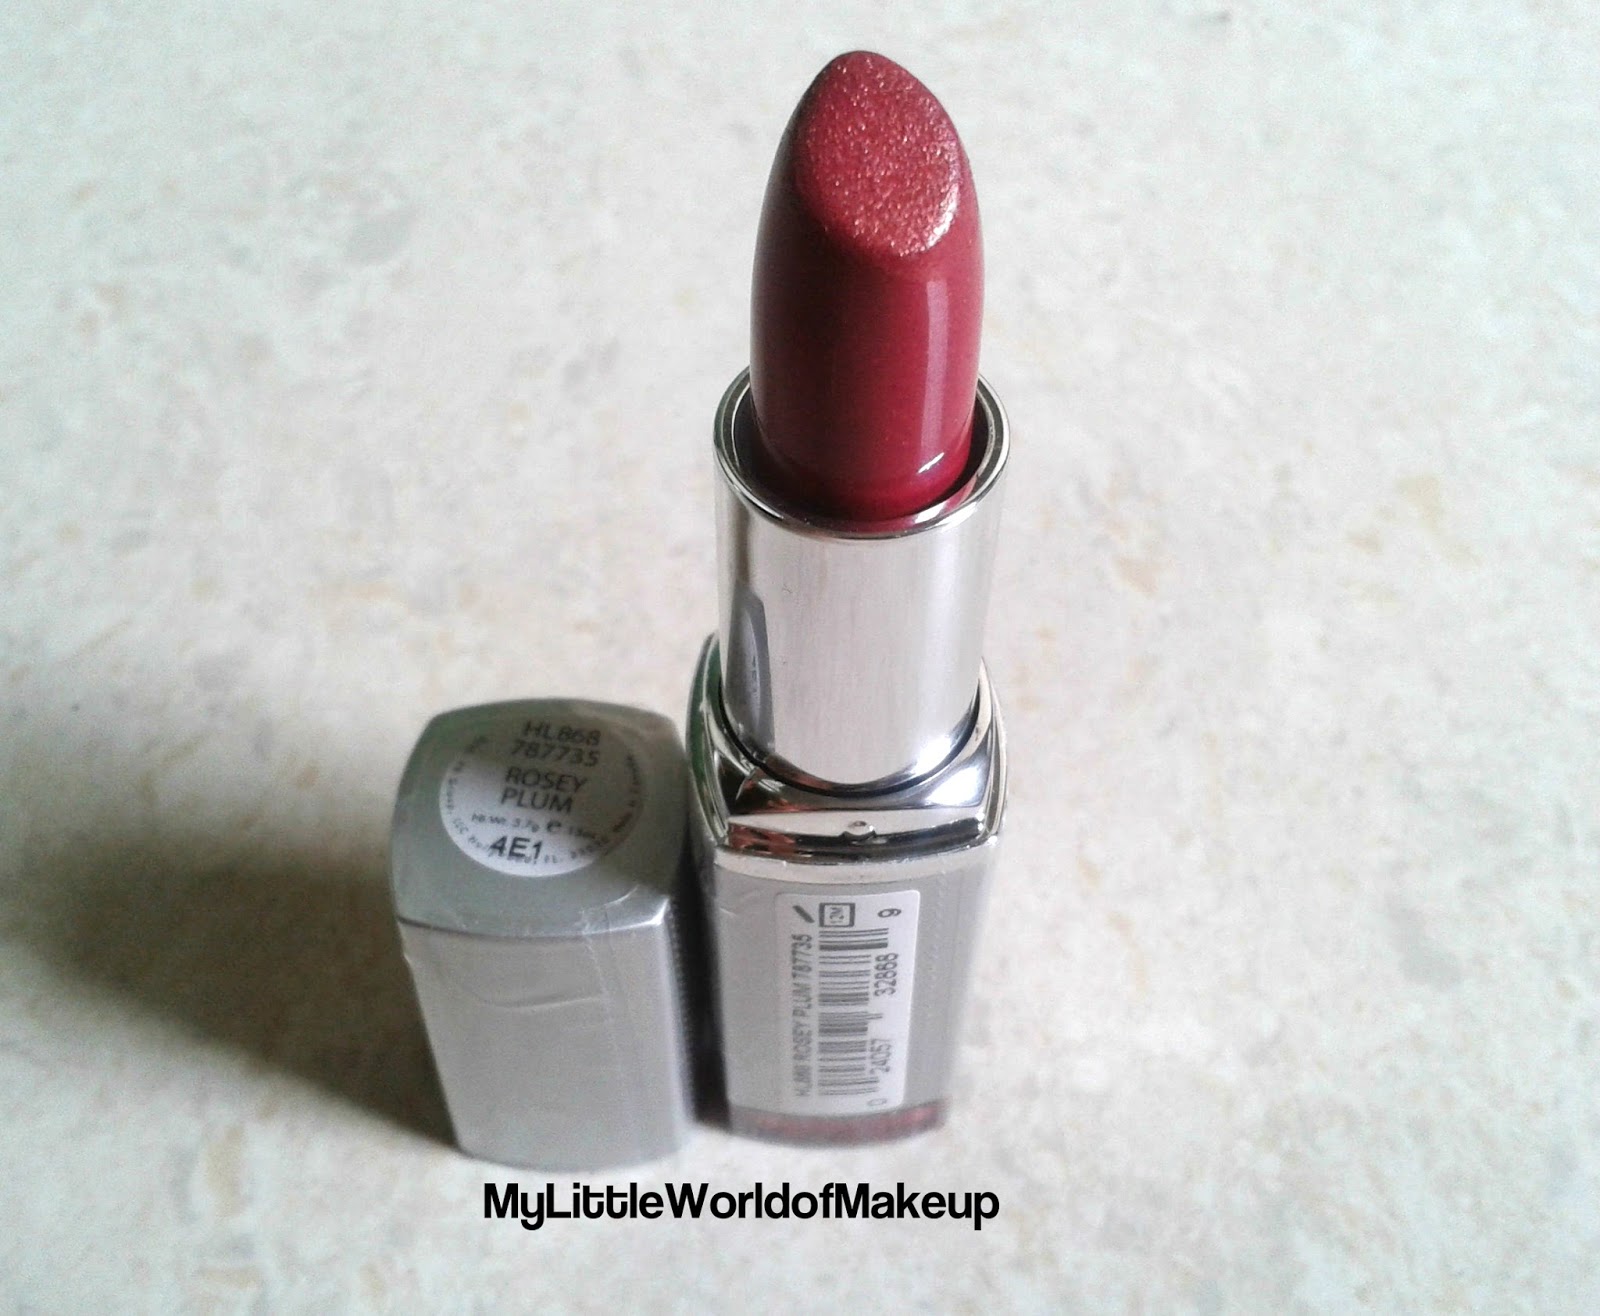 Simran Xxx - Palladio Herbal Lipstick in Rosey Plum Review & Swatches